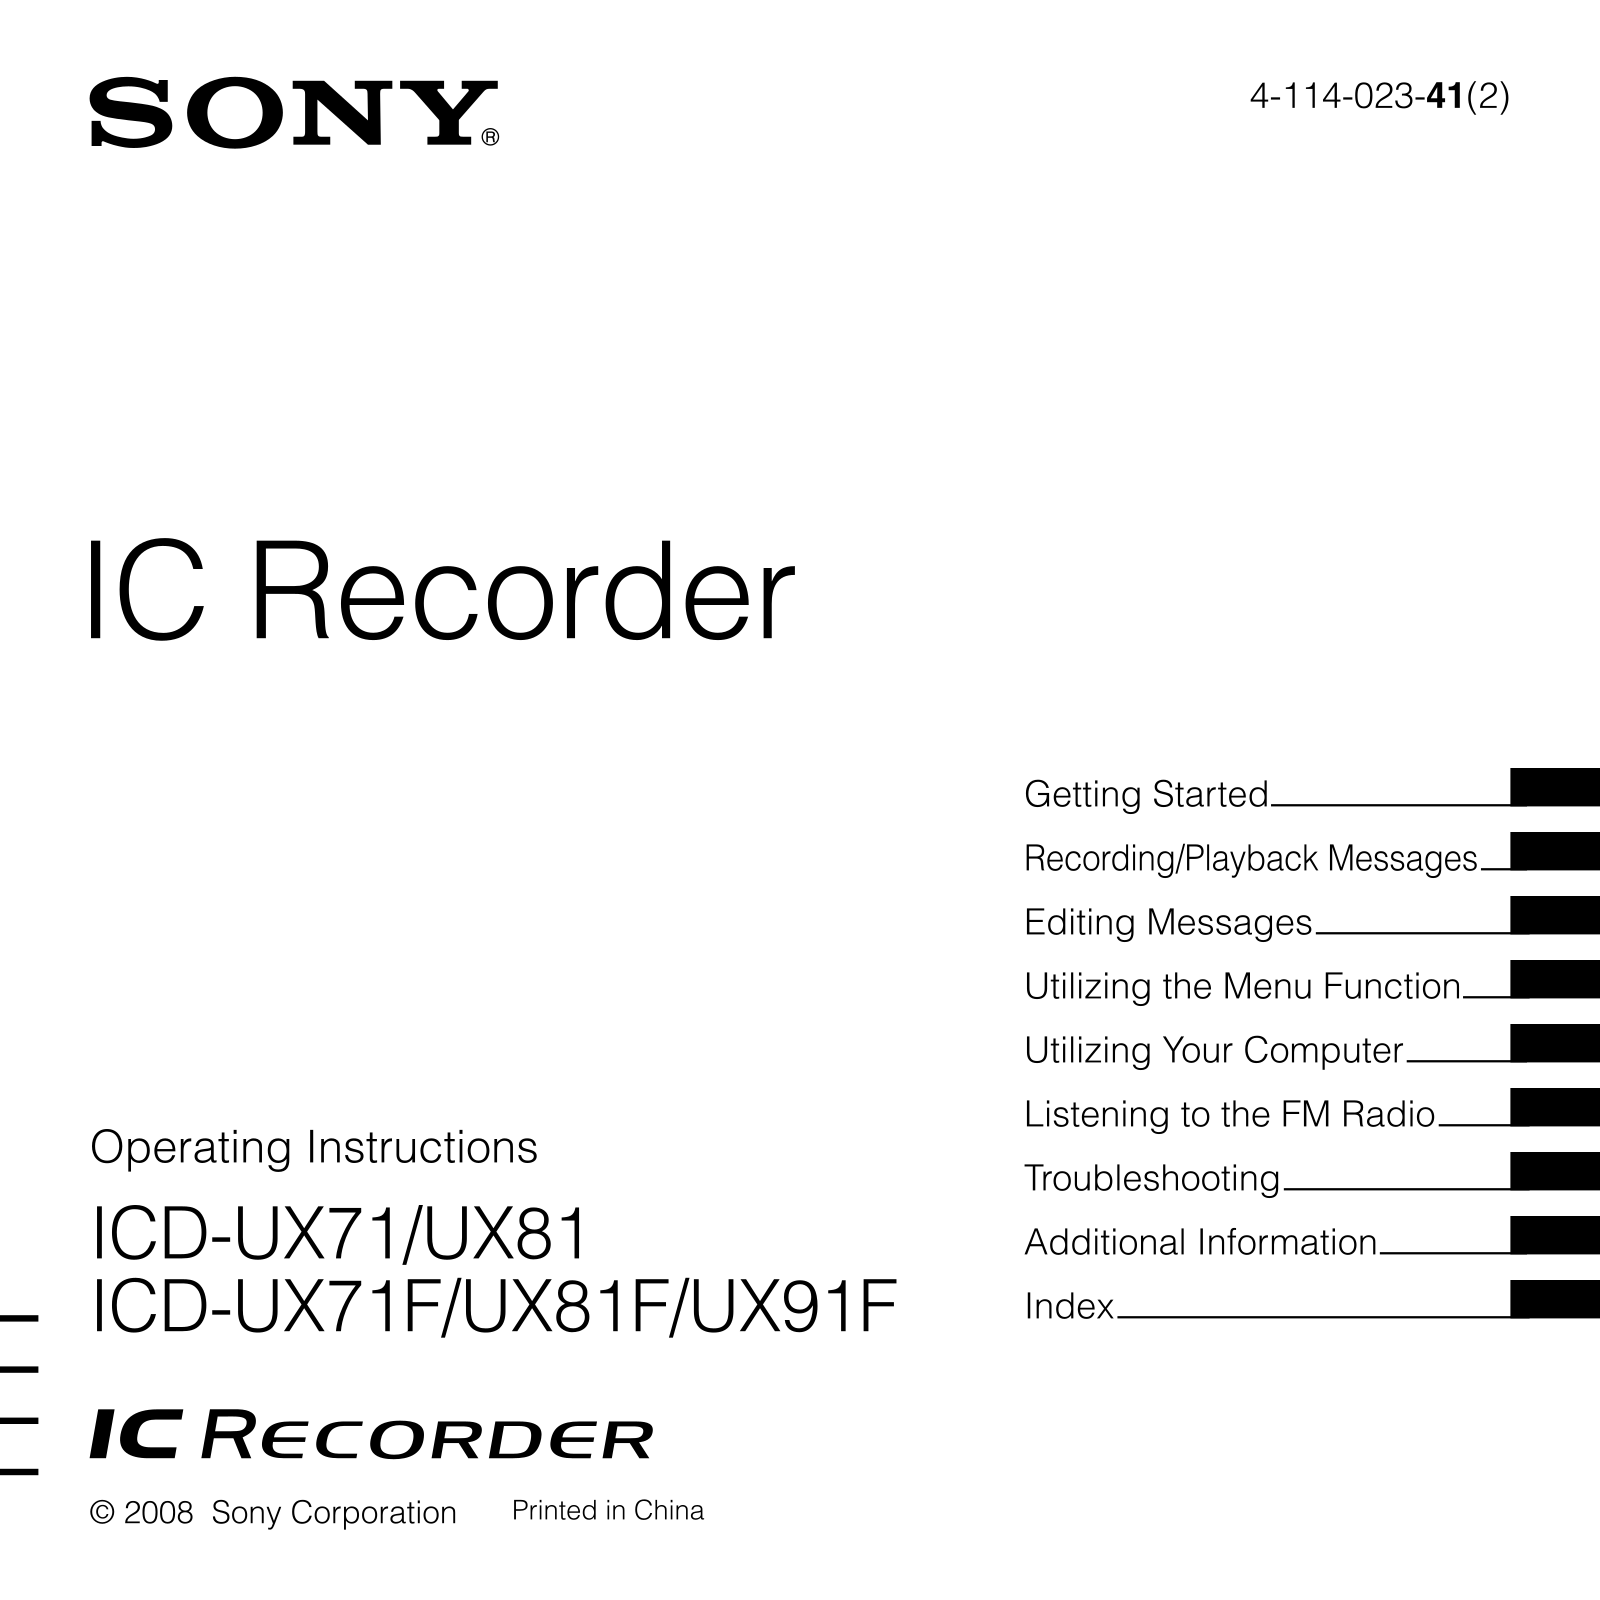 Sony ICD-UX71 User Manual